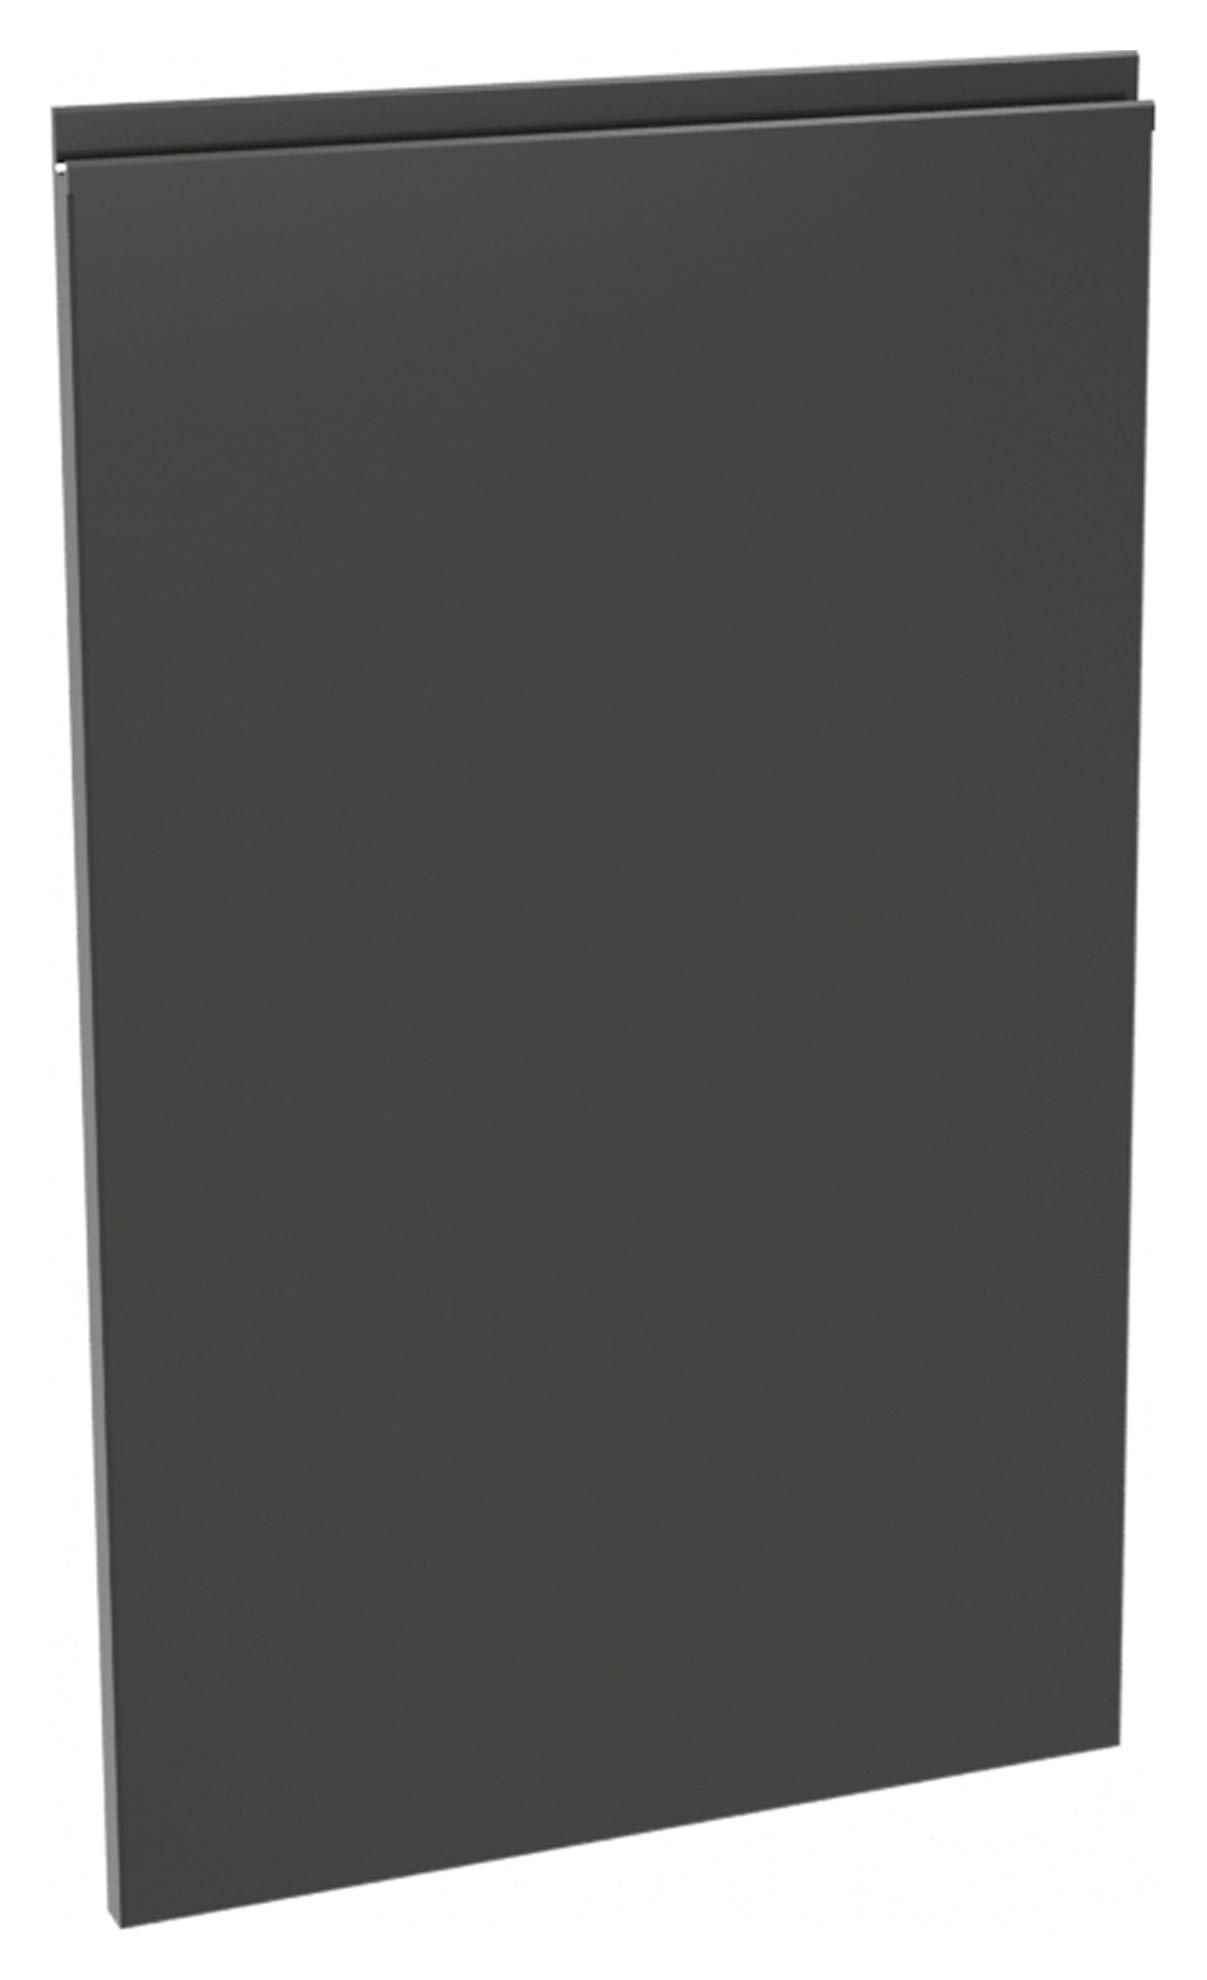 Wickes Madison Dark Grey Fascia Board - 450